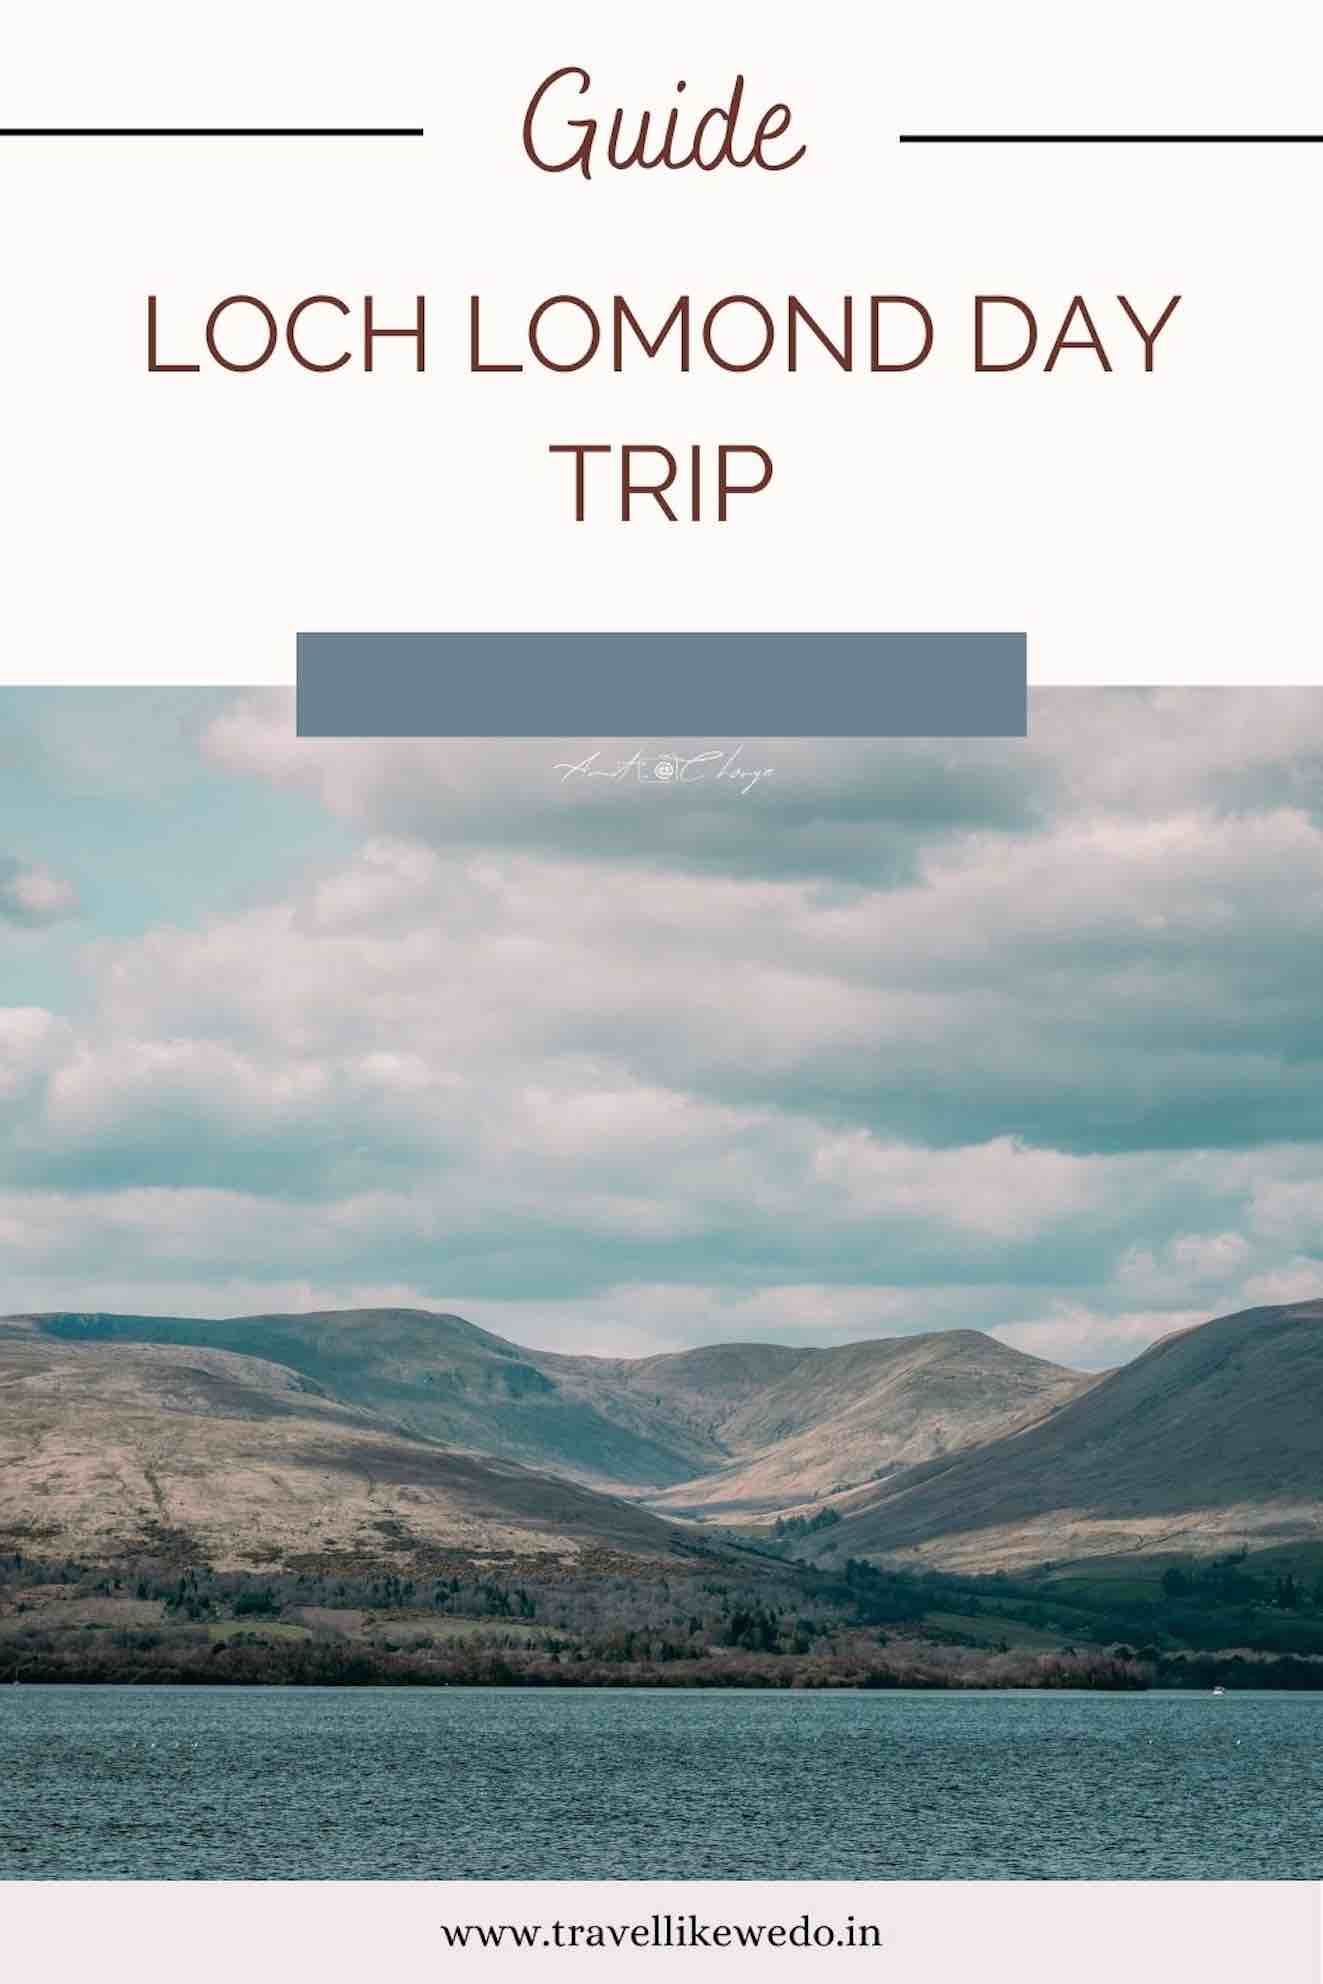 Day trip to loch lomond